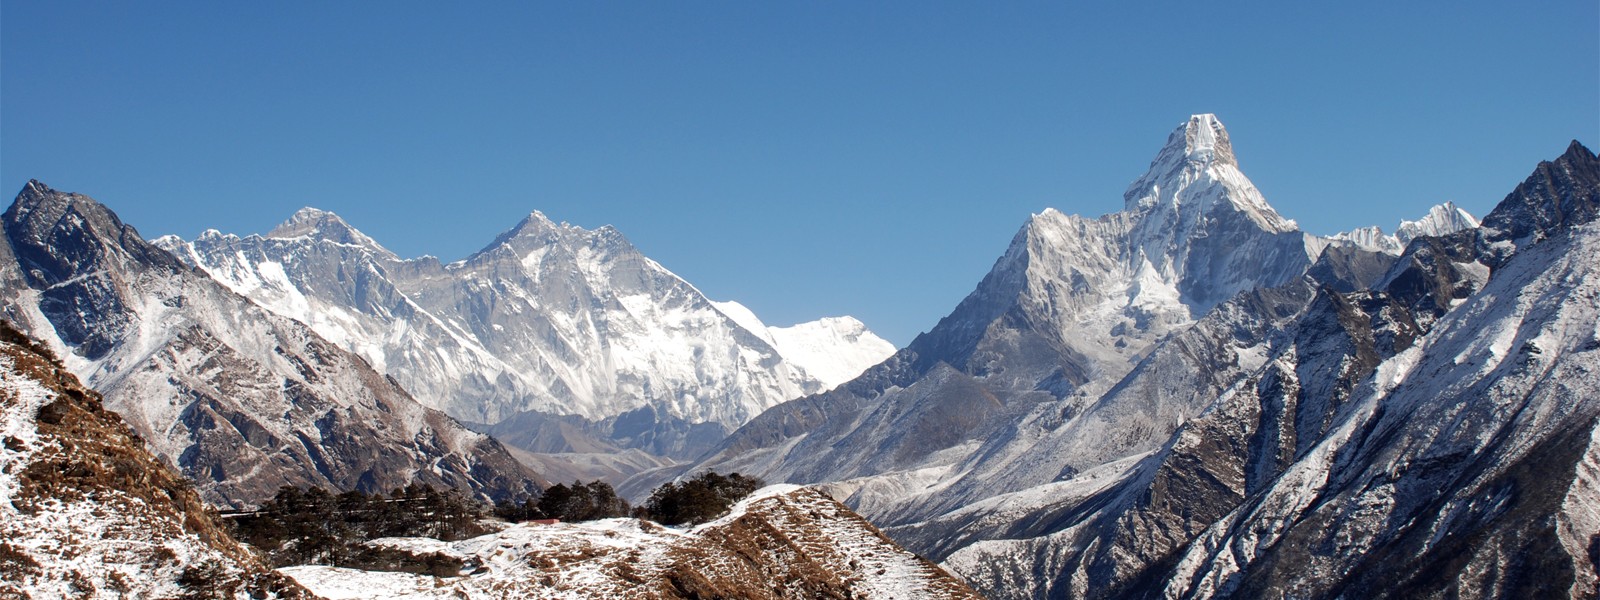 Mt. Everest and Ama Dablam